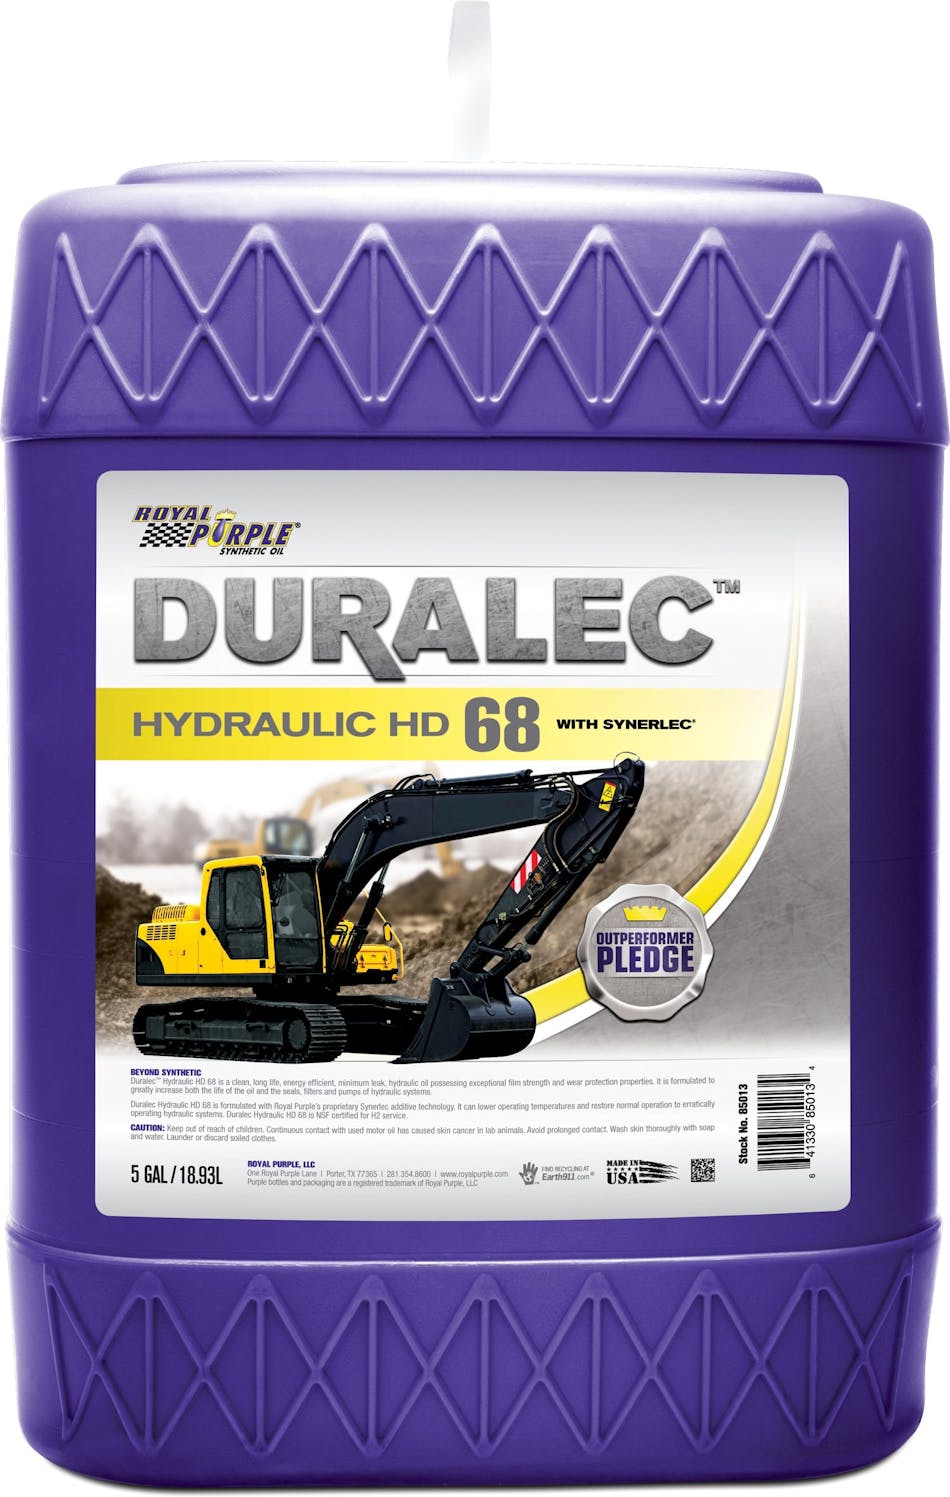 Royal Purple Duralec Hydraulic HD 68 - Pail (High Res)